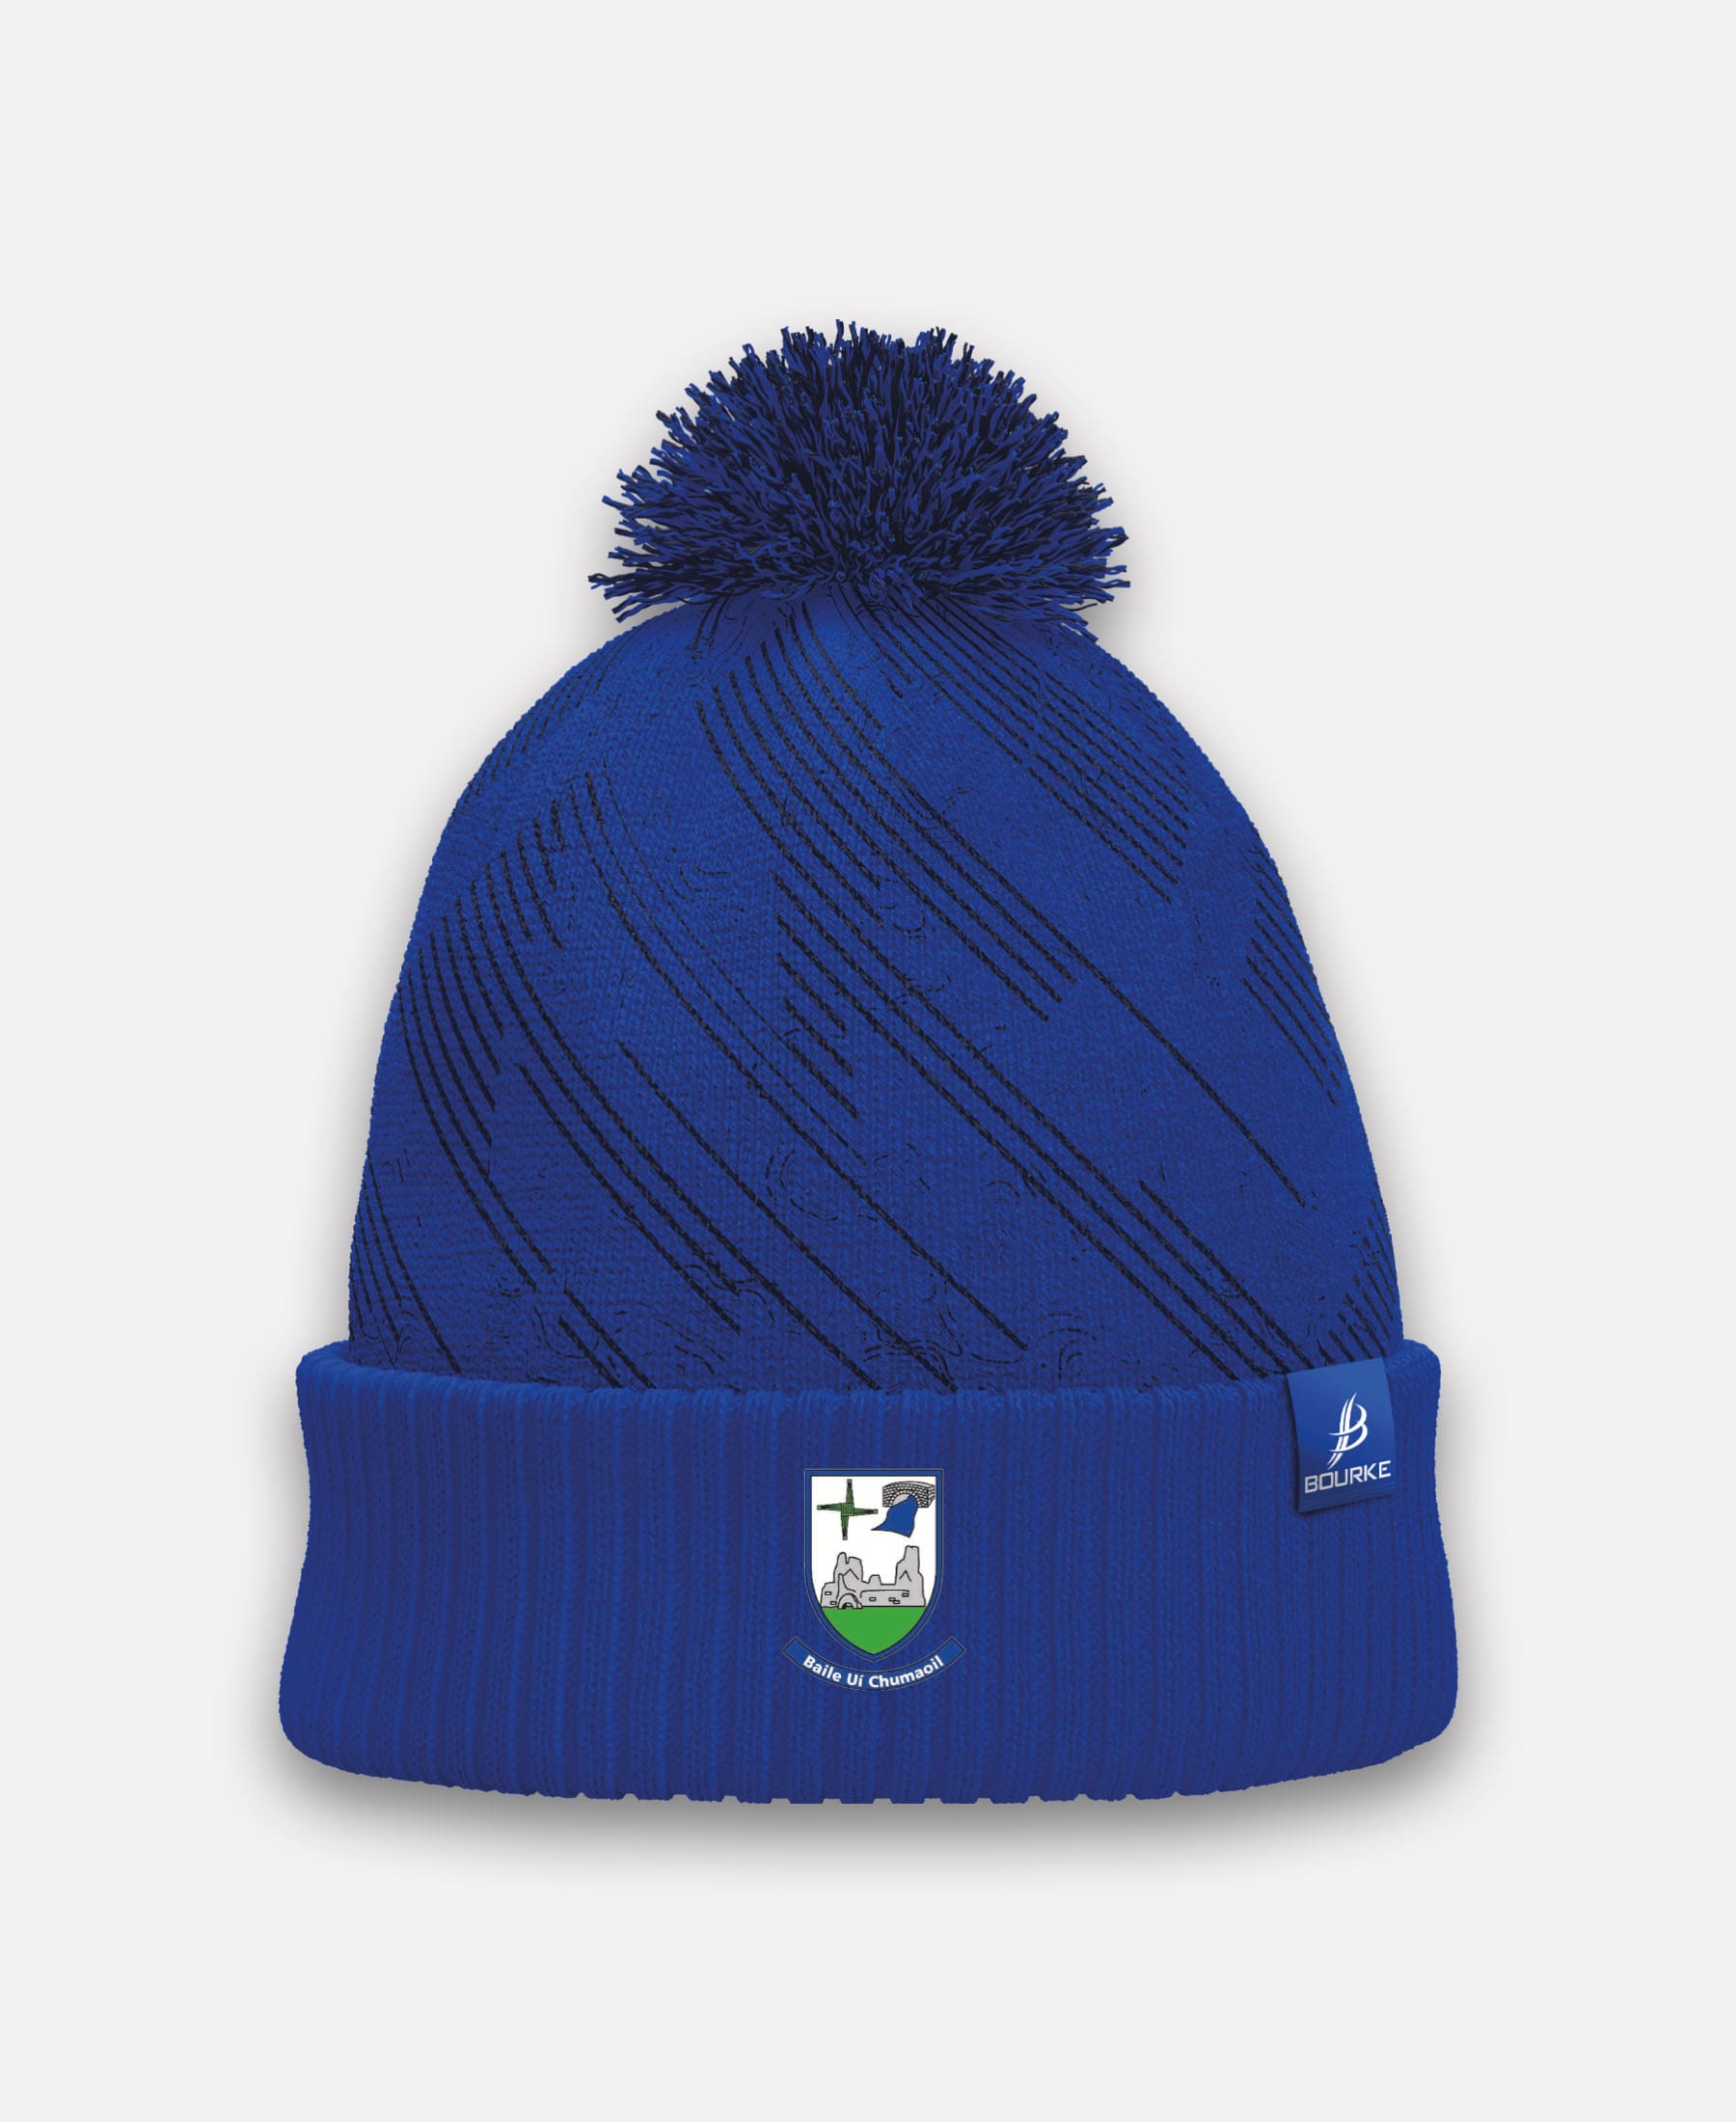 Ballycomoyle BARR Bobble Hat (Navy/blue)